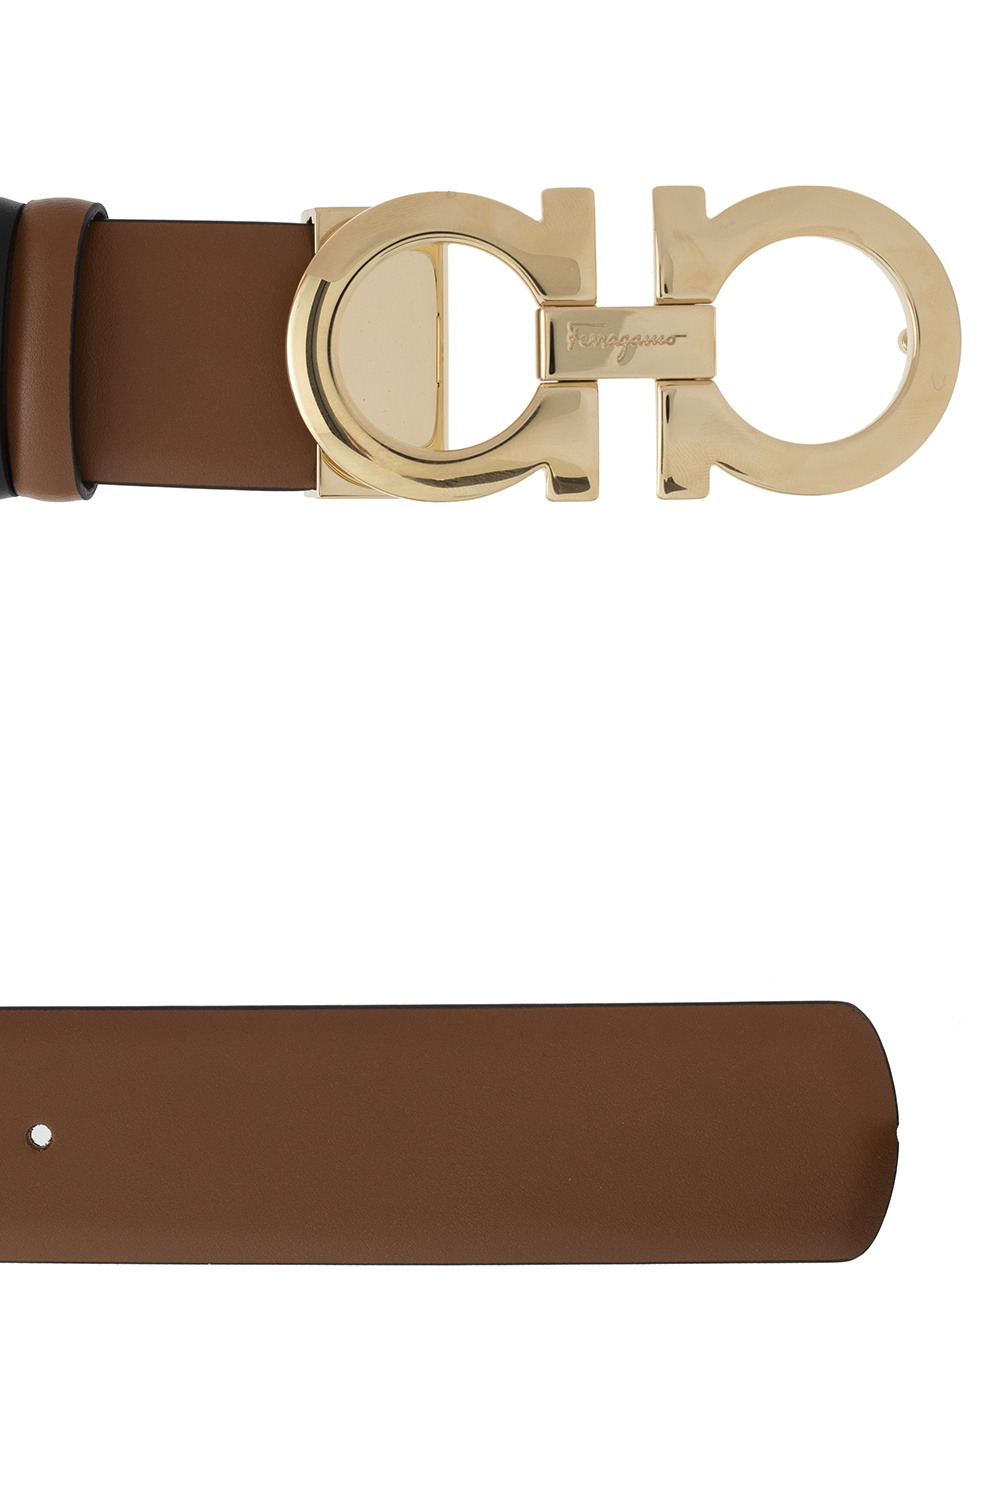 Salvatore Ferragamo Leather belt with logo